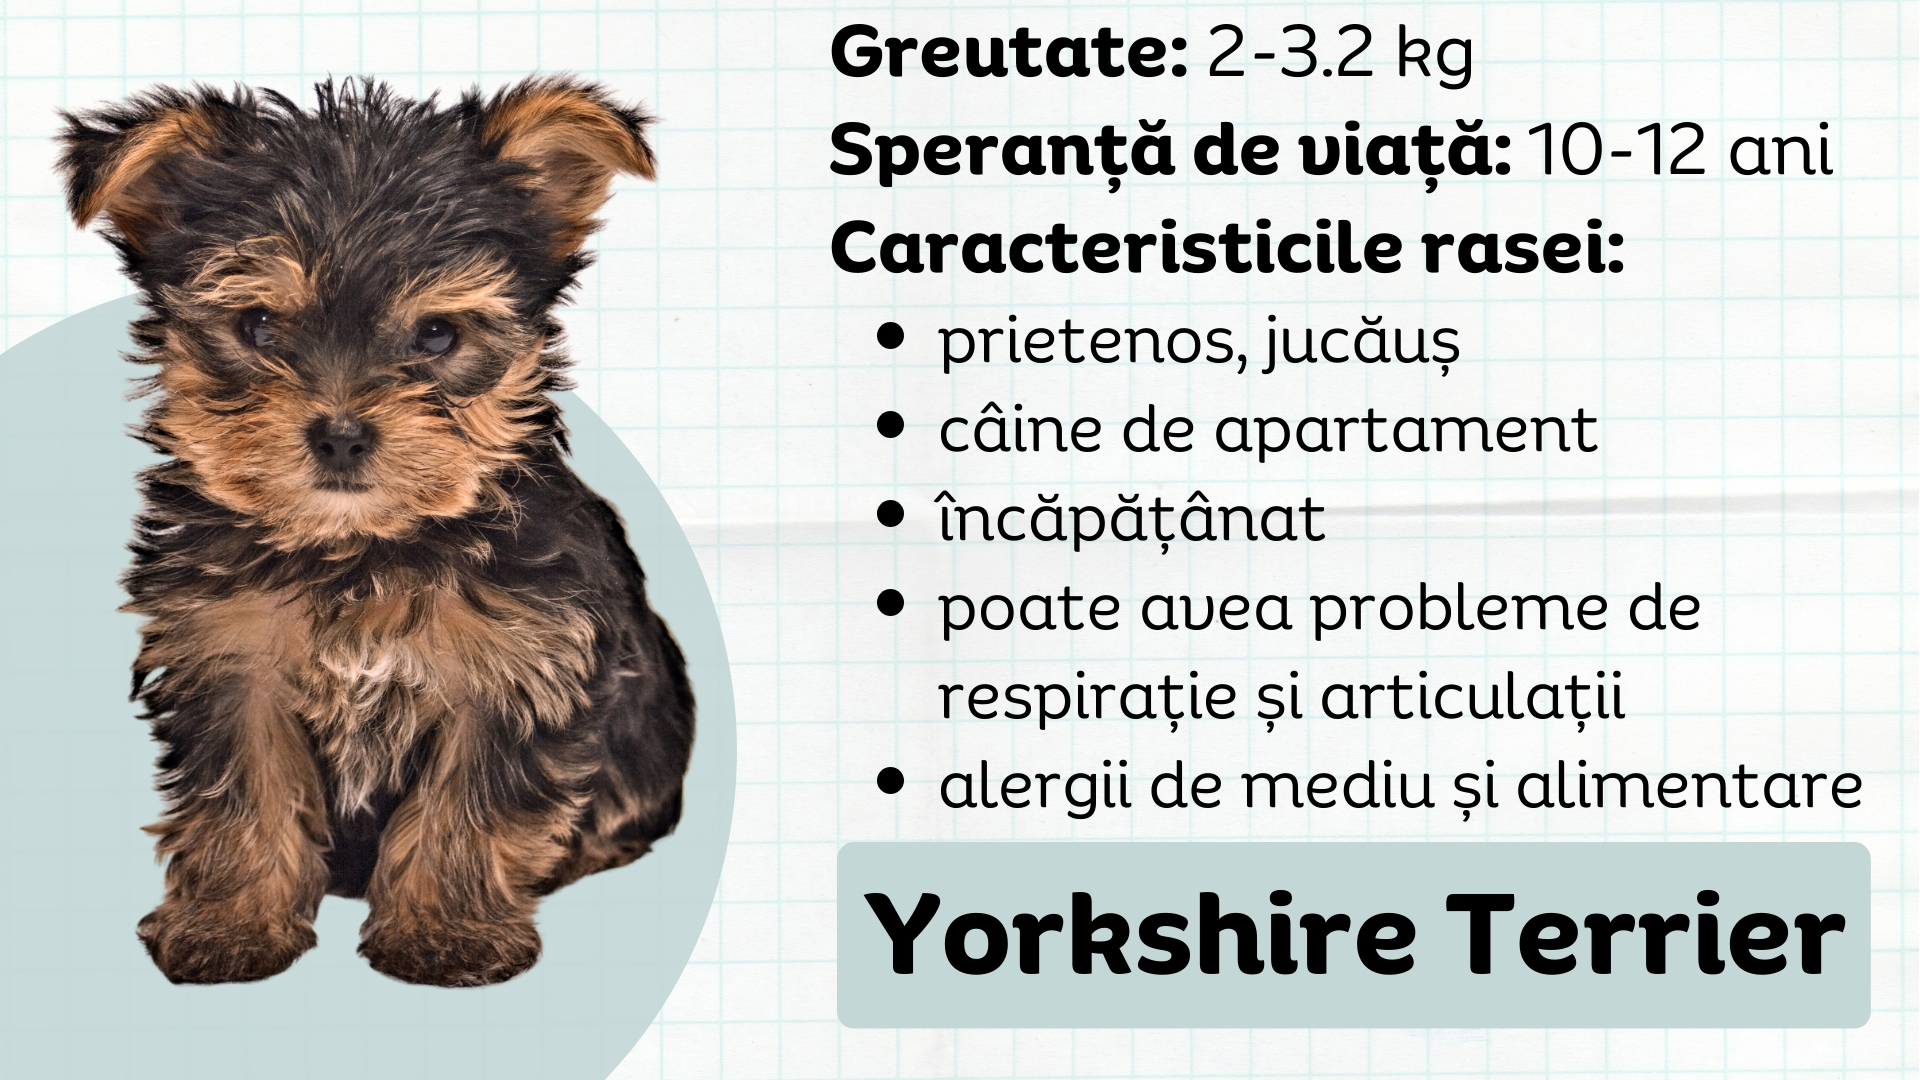 Yorkshire Terrier caracteristicile rasei